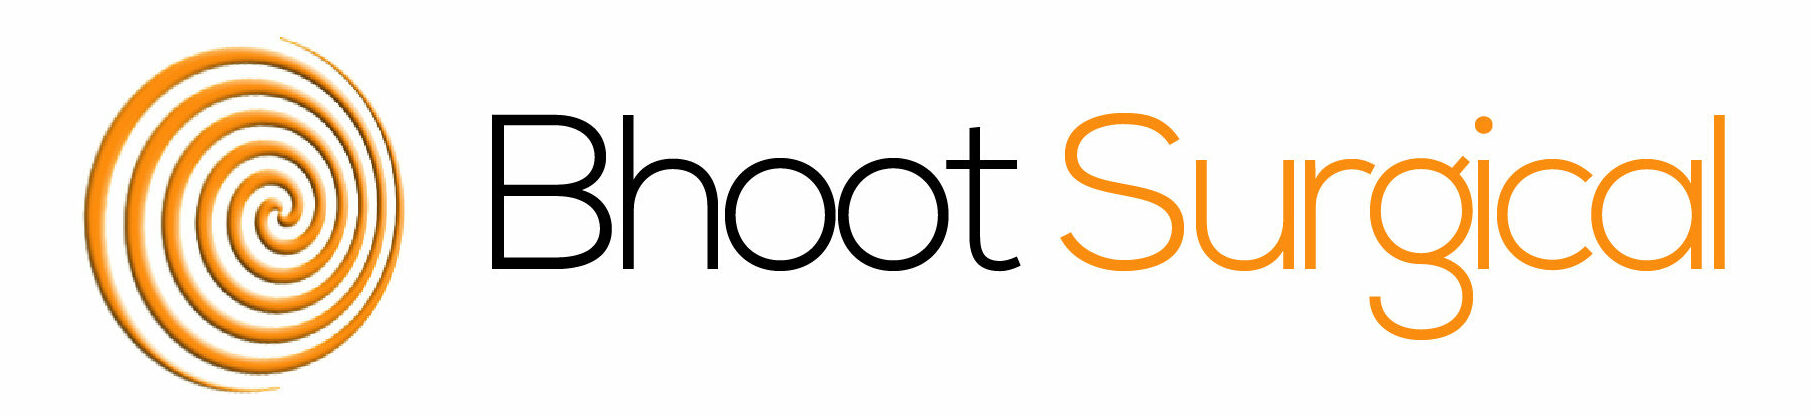 Dr. bhoot logo-03